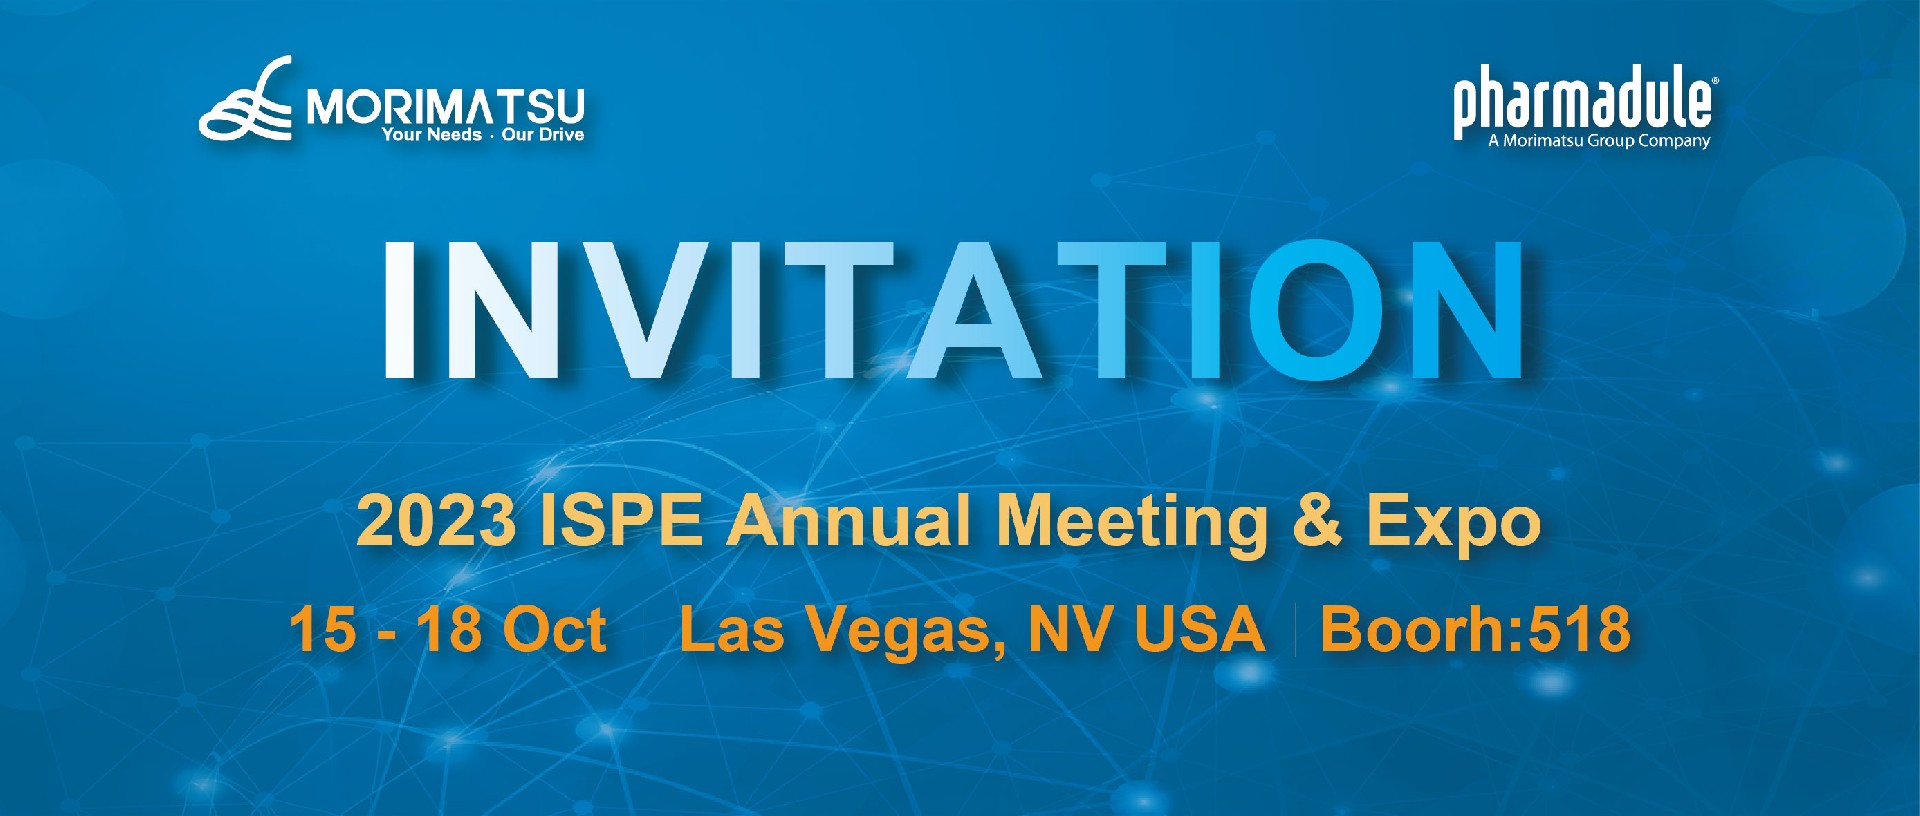 Invitation | Pharmadule Morimatsu AB Invites You to 2023 ISPE Annual Meeting & Expo